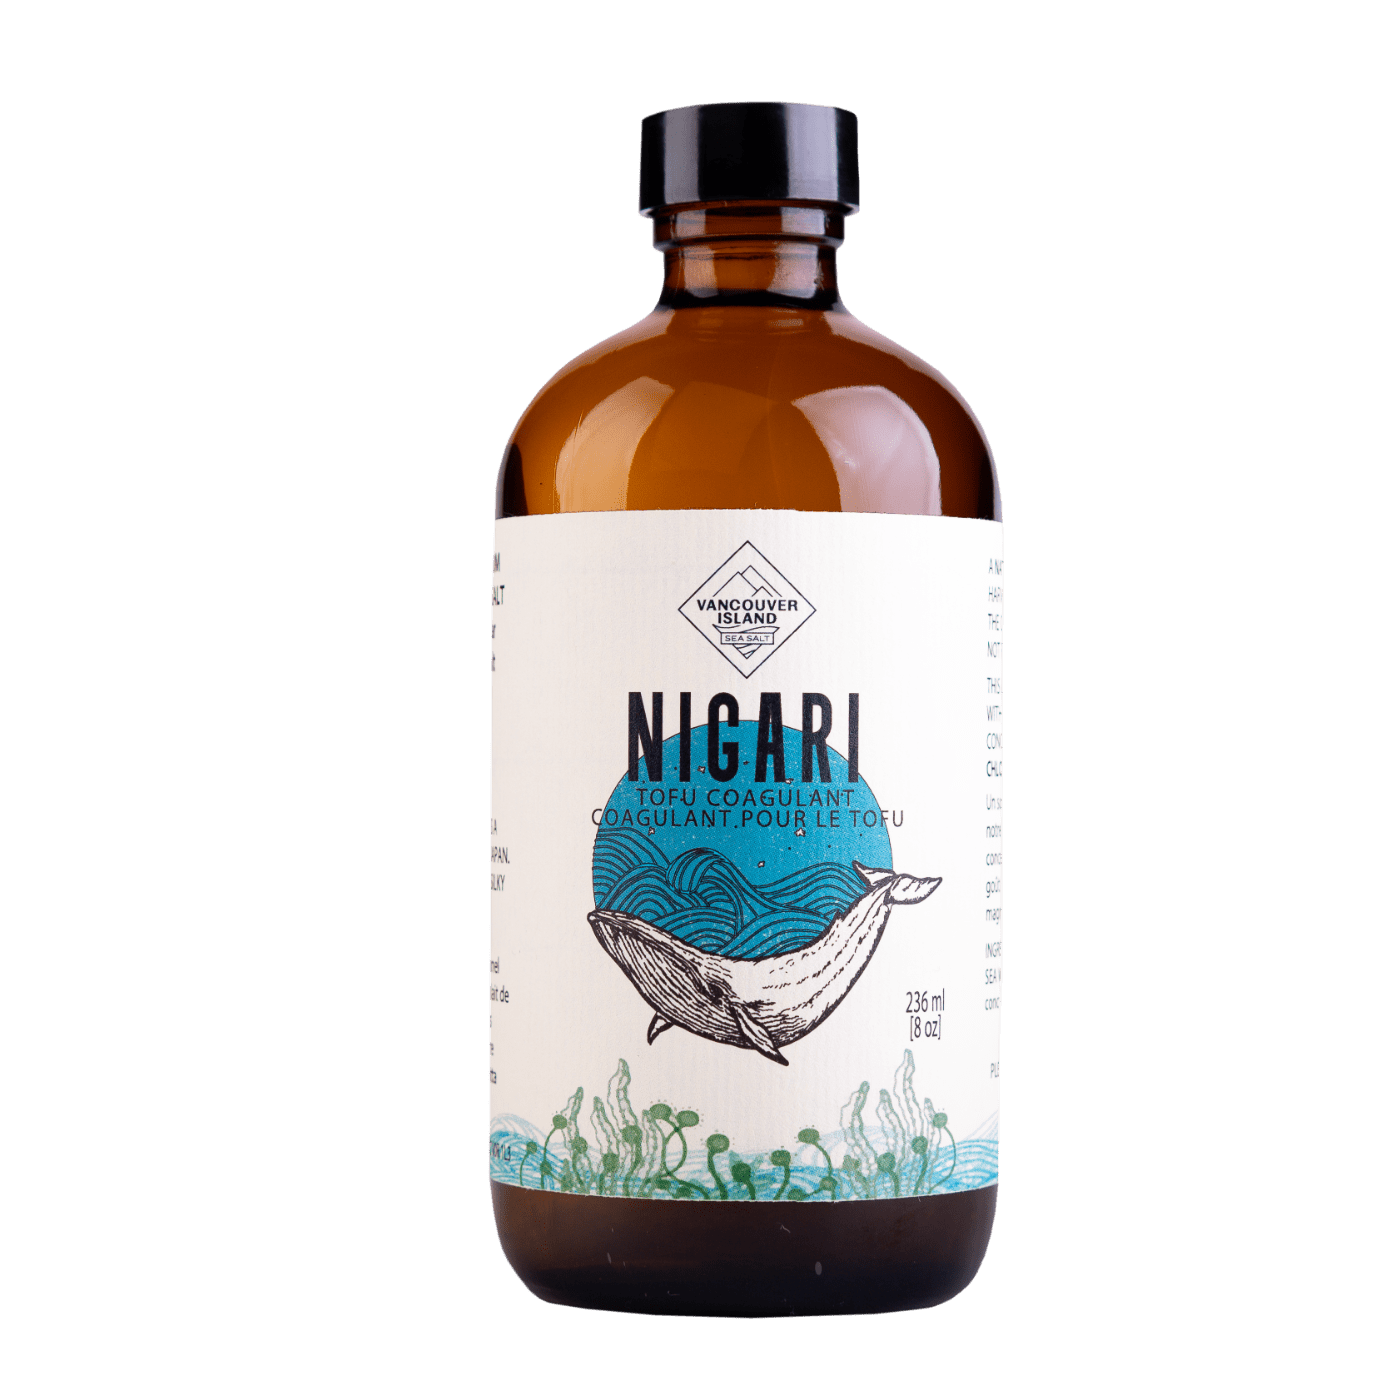 Nigari 236 ml - VANCOUVER ISLAND SEA SALT